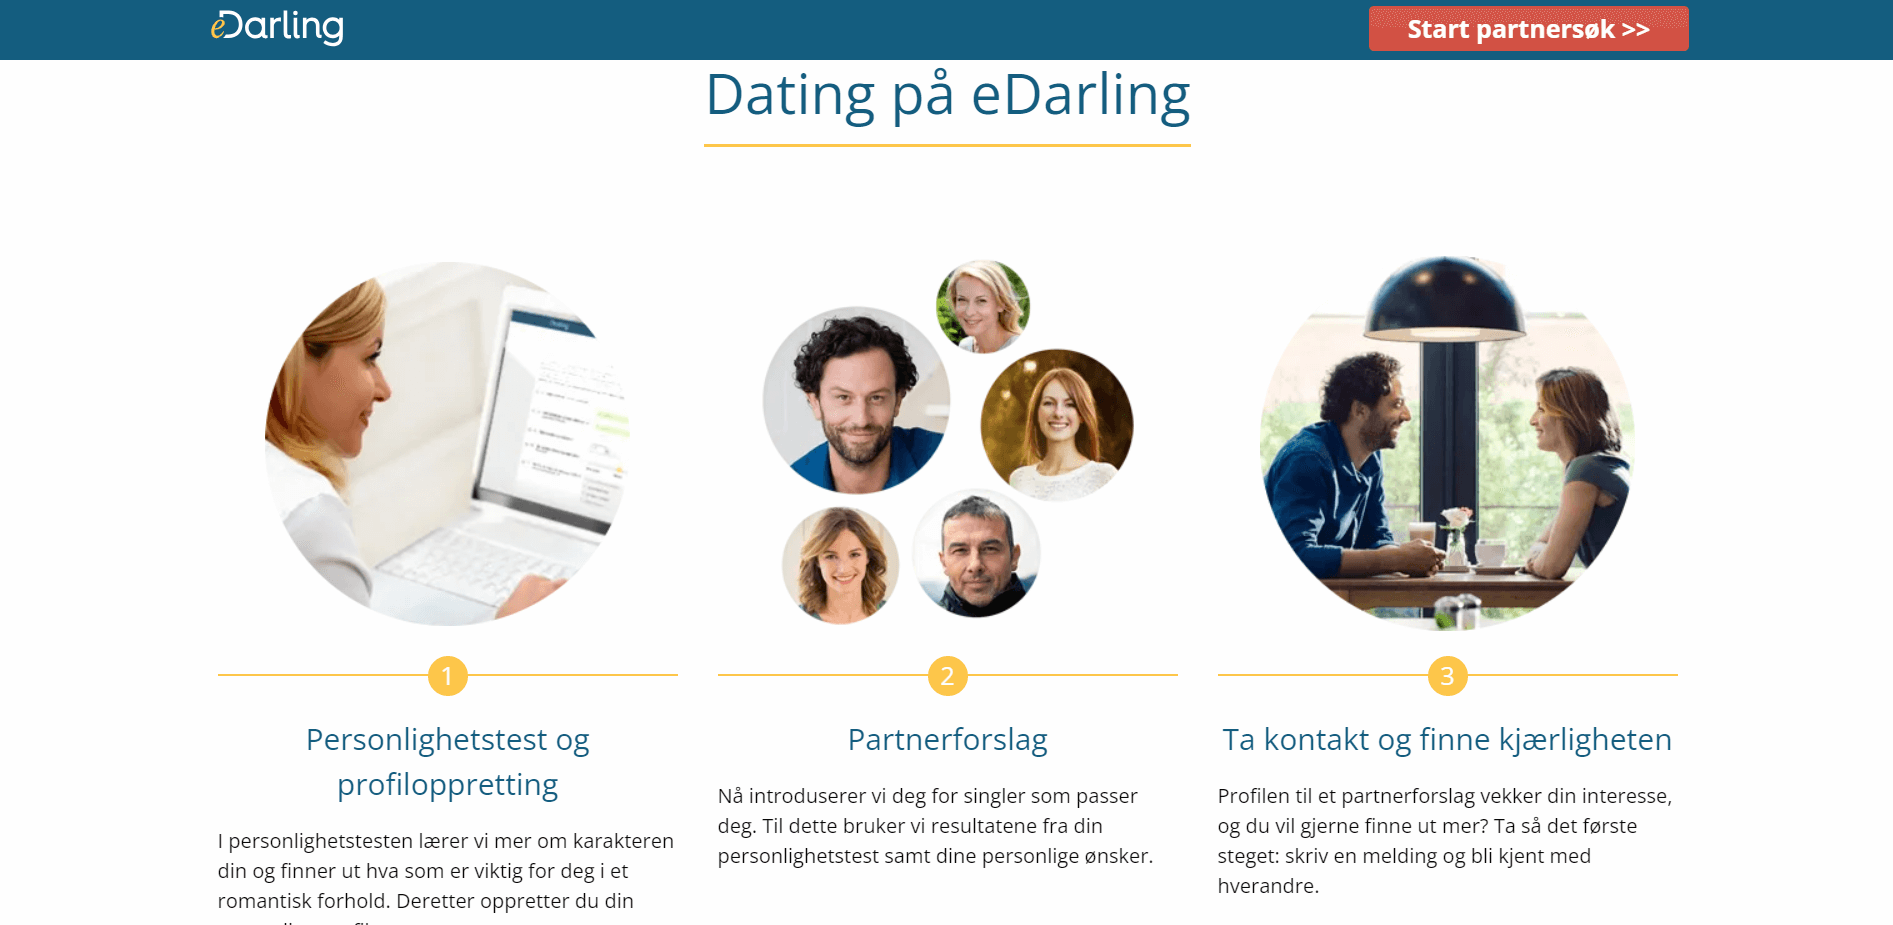 eDarling Norge